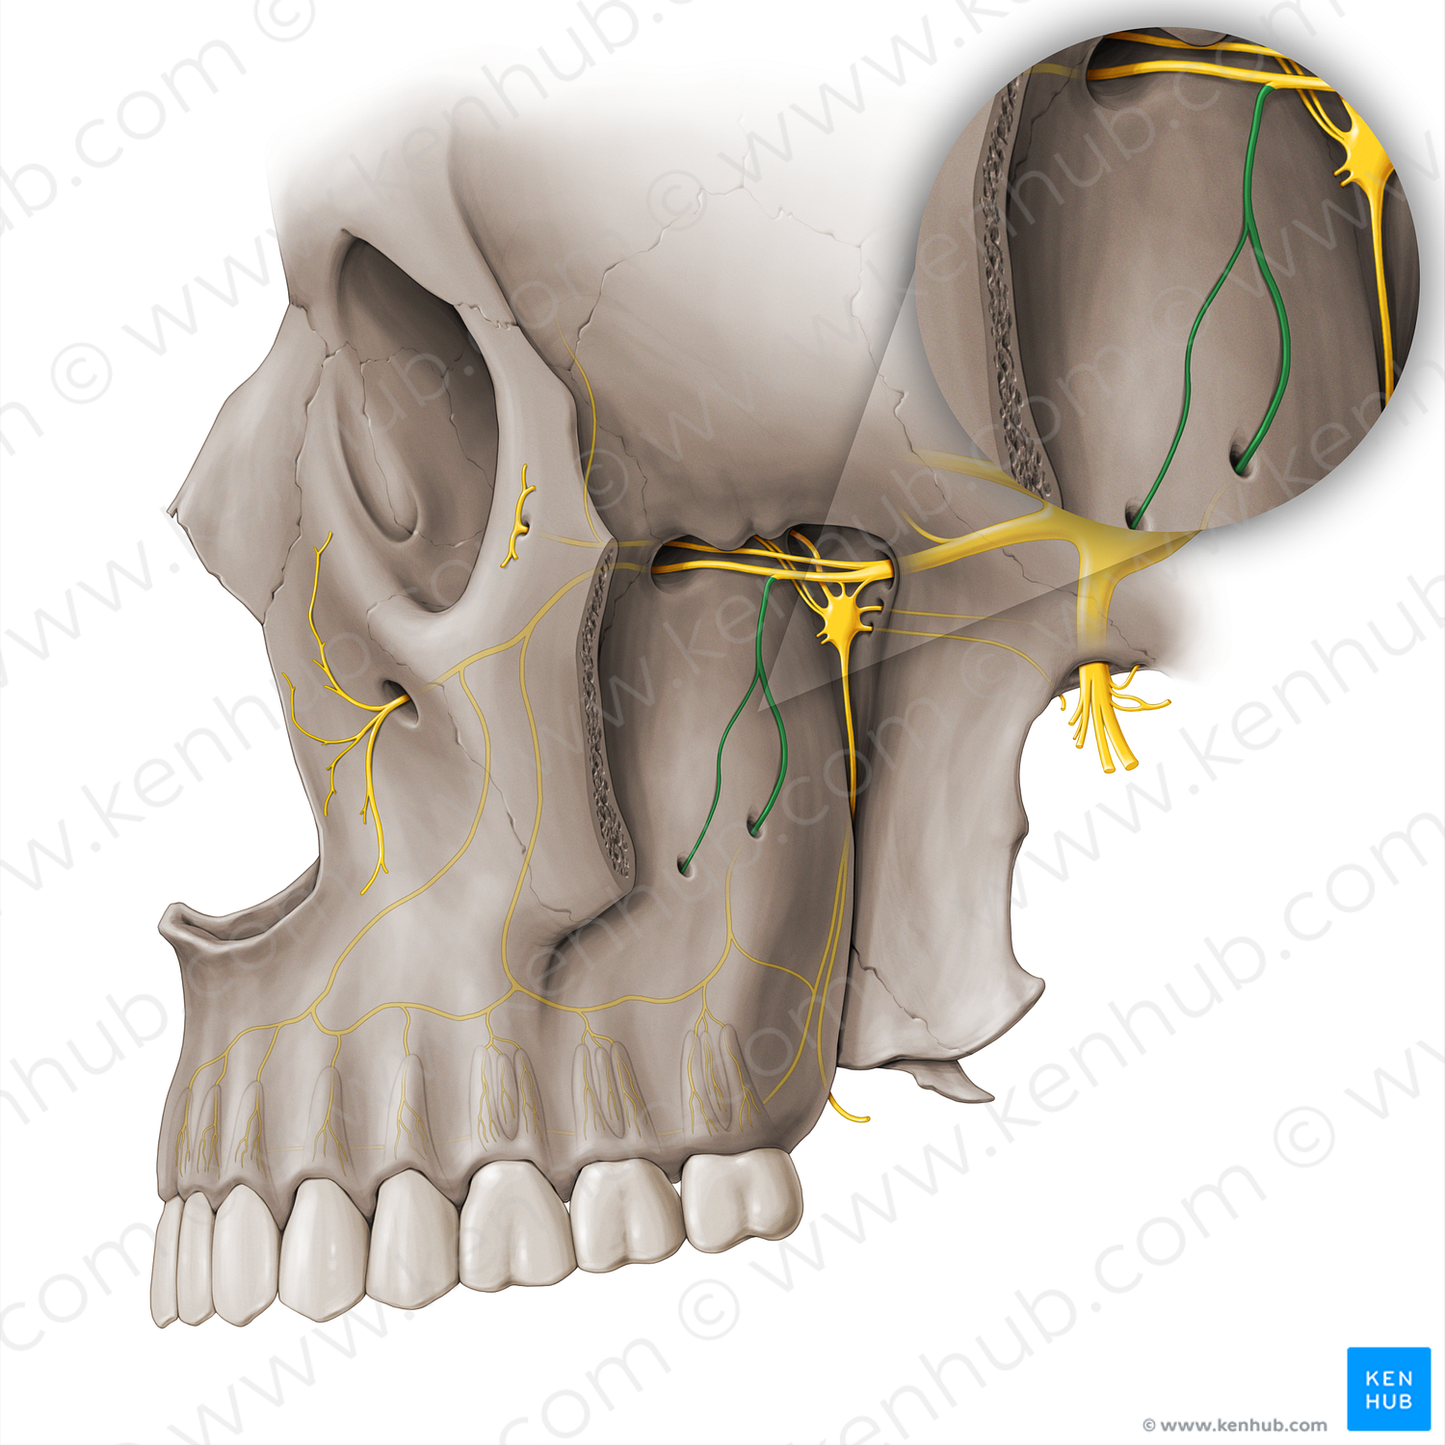 Posterior superior alveolar nerve (#18471)